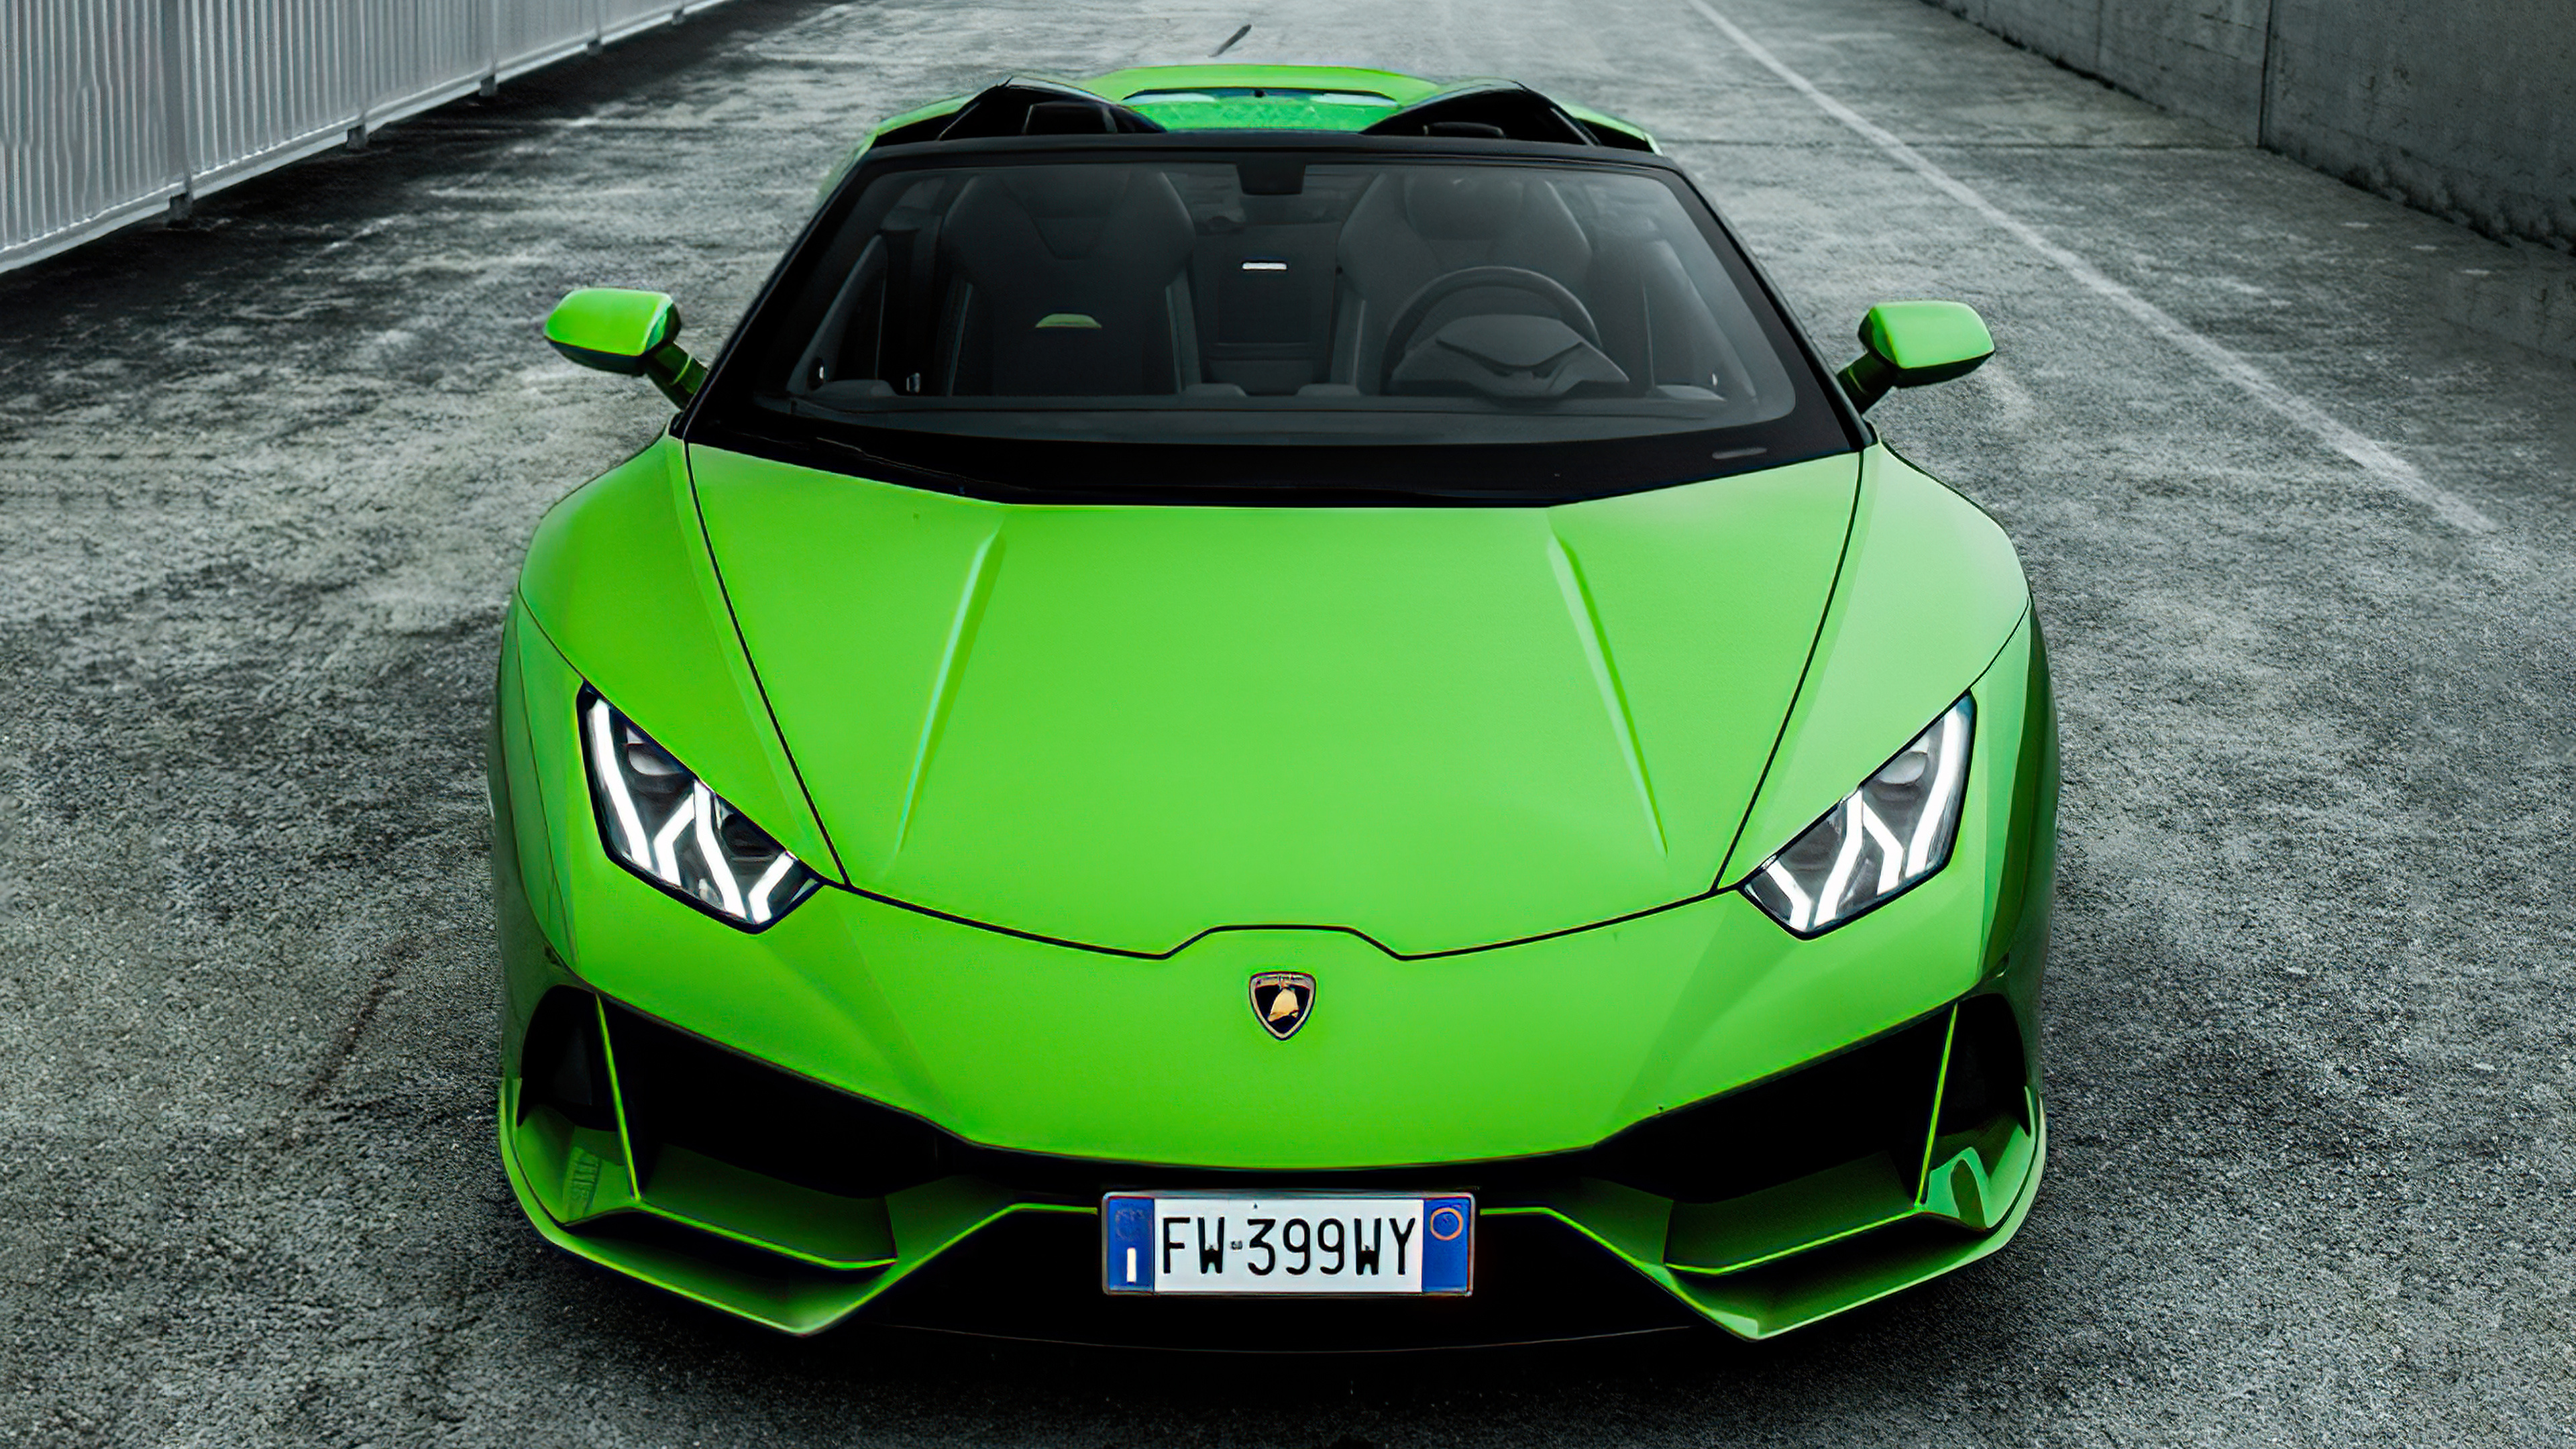 Lamborghini Huracan, Auto marvel, Iconic design, Roadster beauty, 3840x2160 4K Desktop